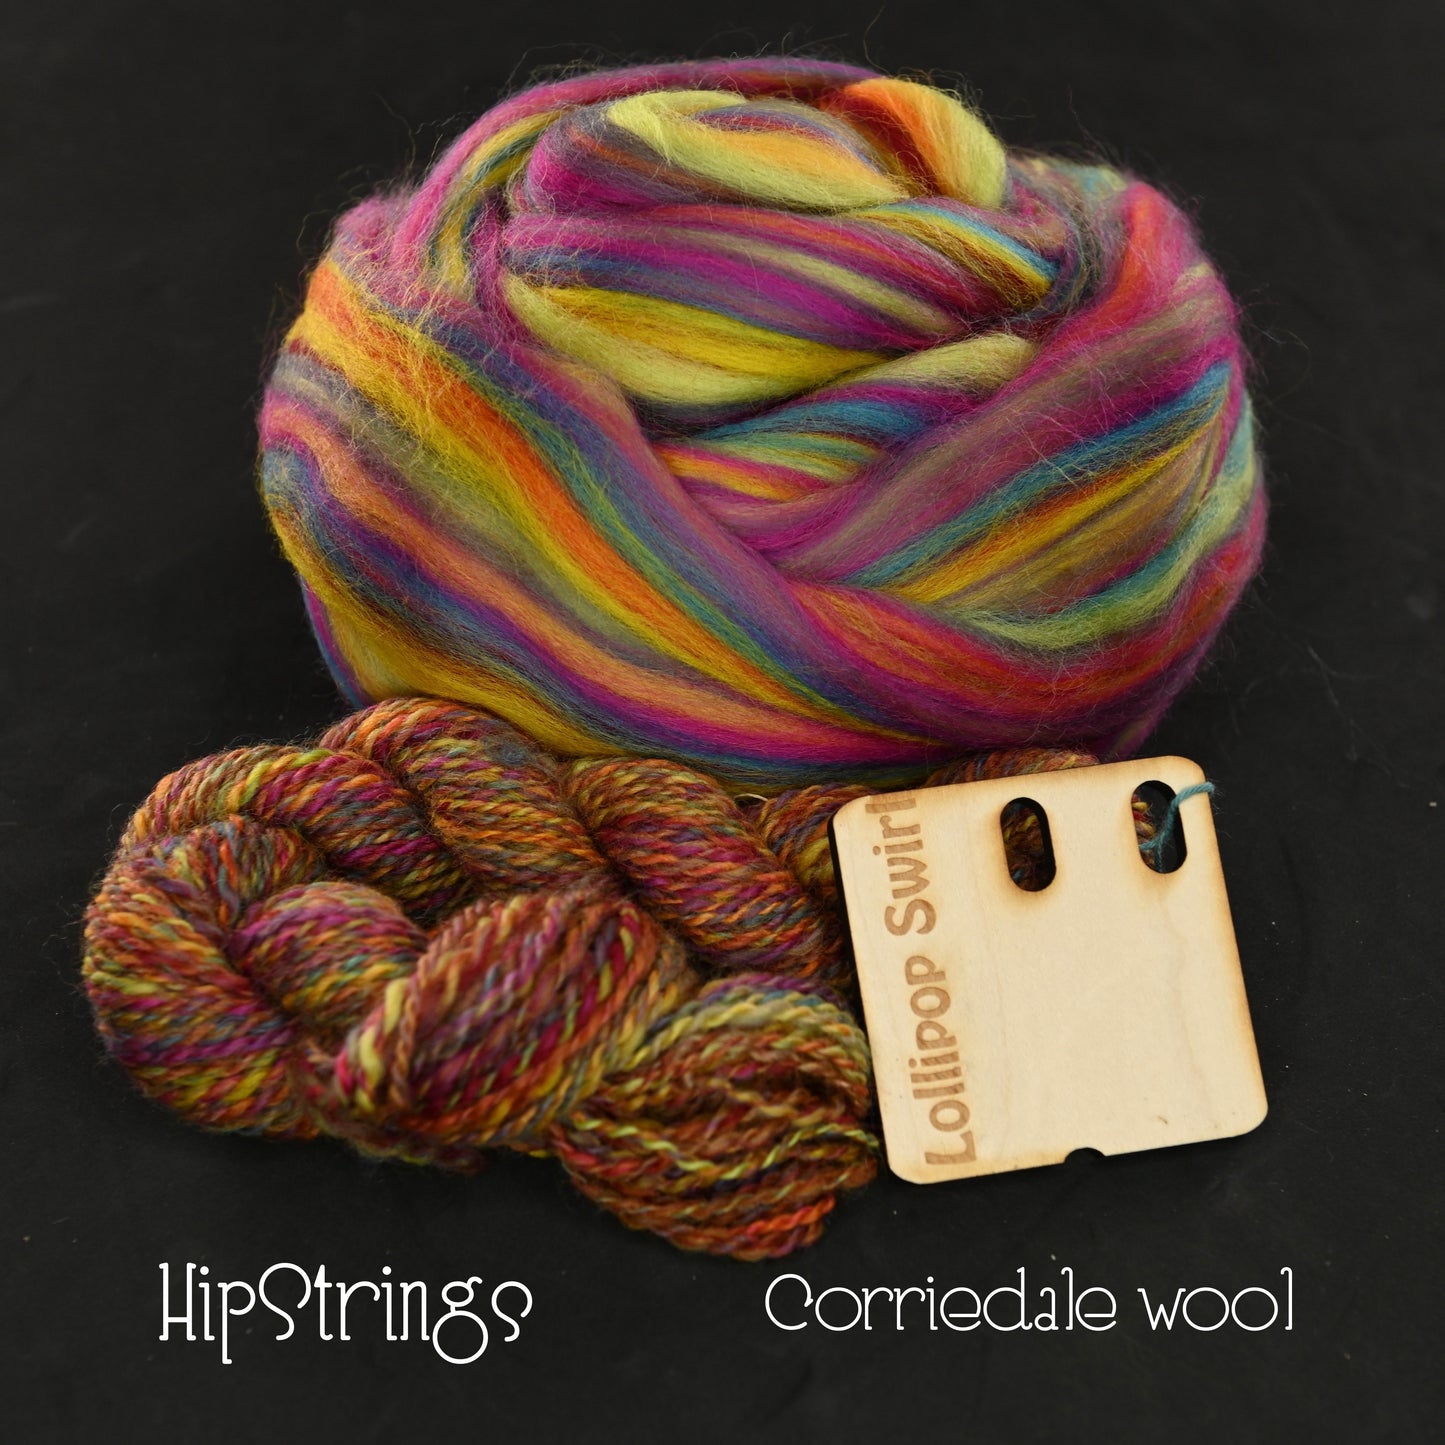 Lollipop Swirl - Signature Blend Corriedale wool Combed Top - 4 oz